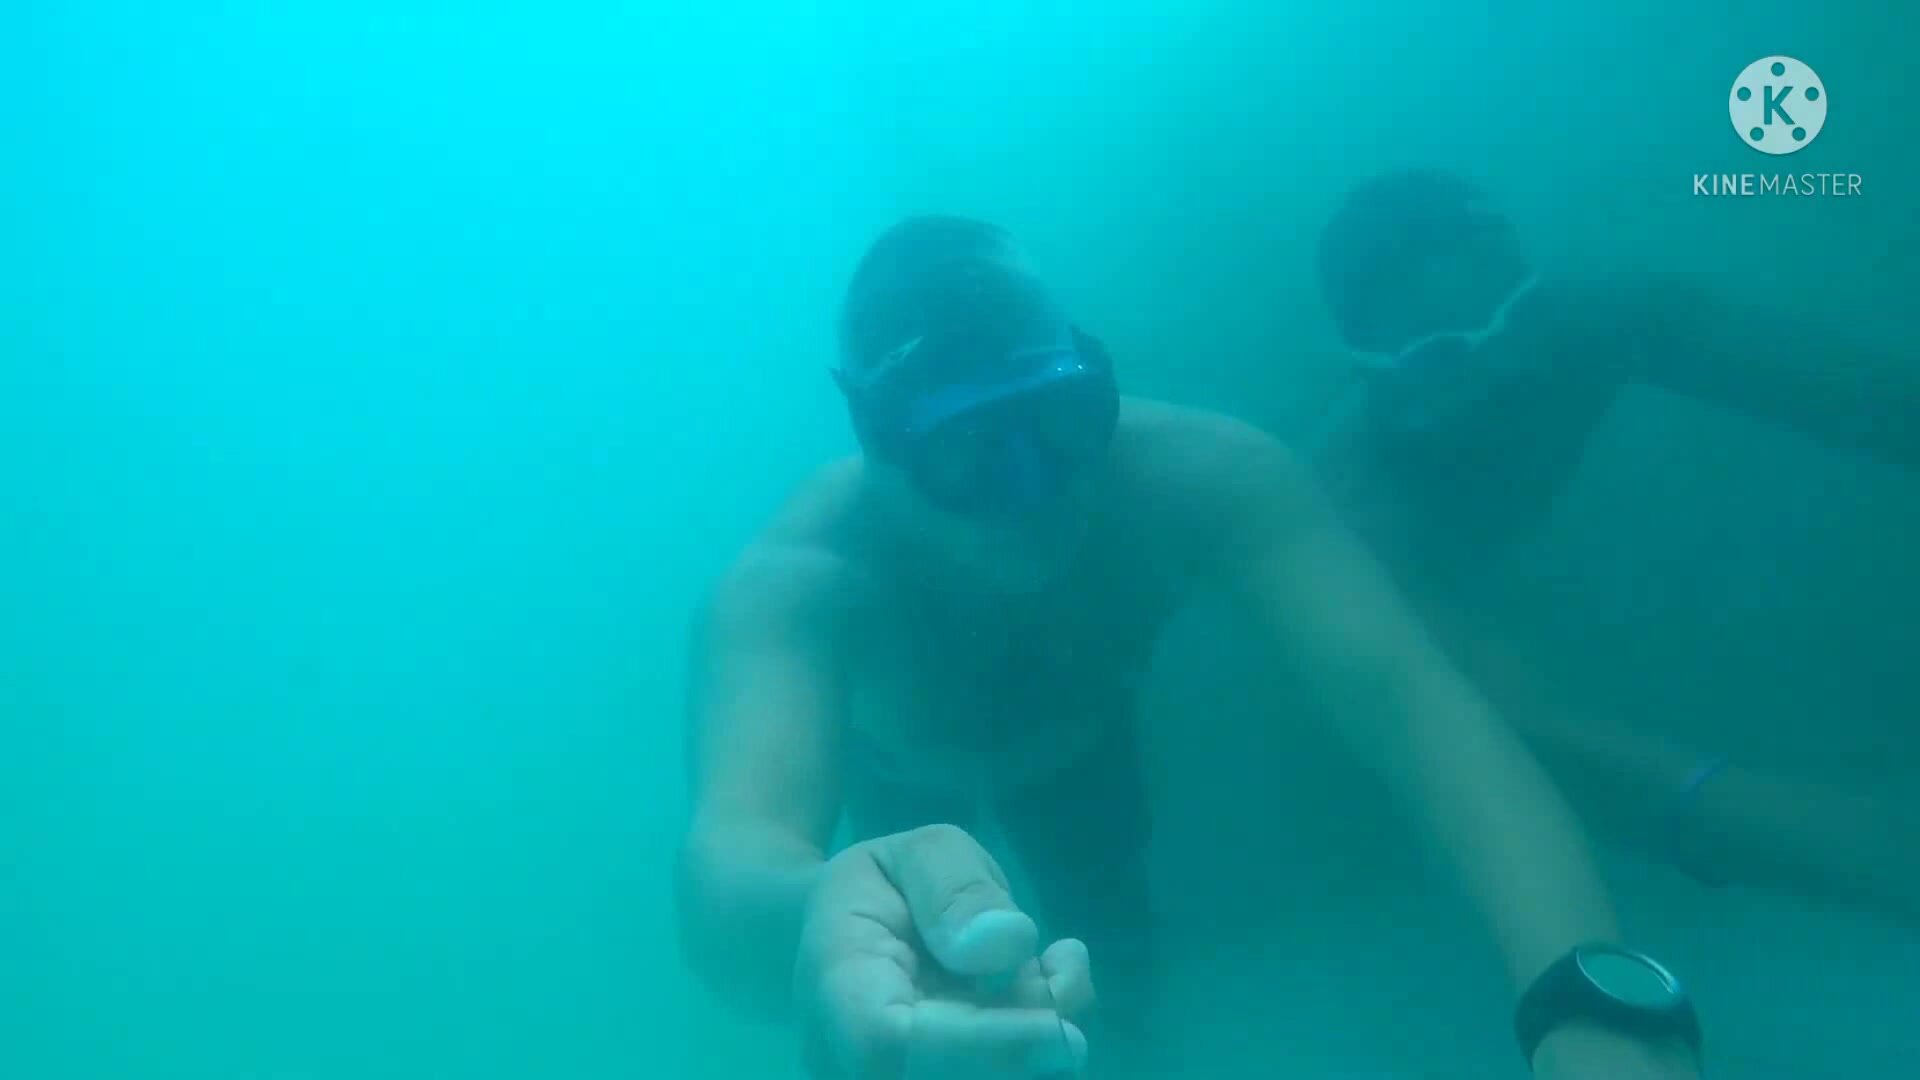 Kareem and friend's underwater dynamic breathold